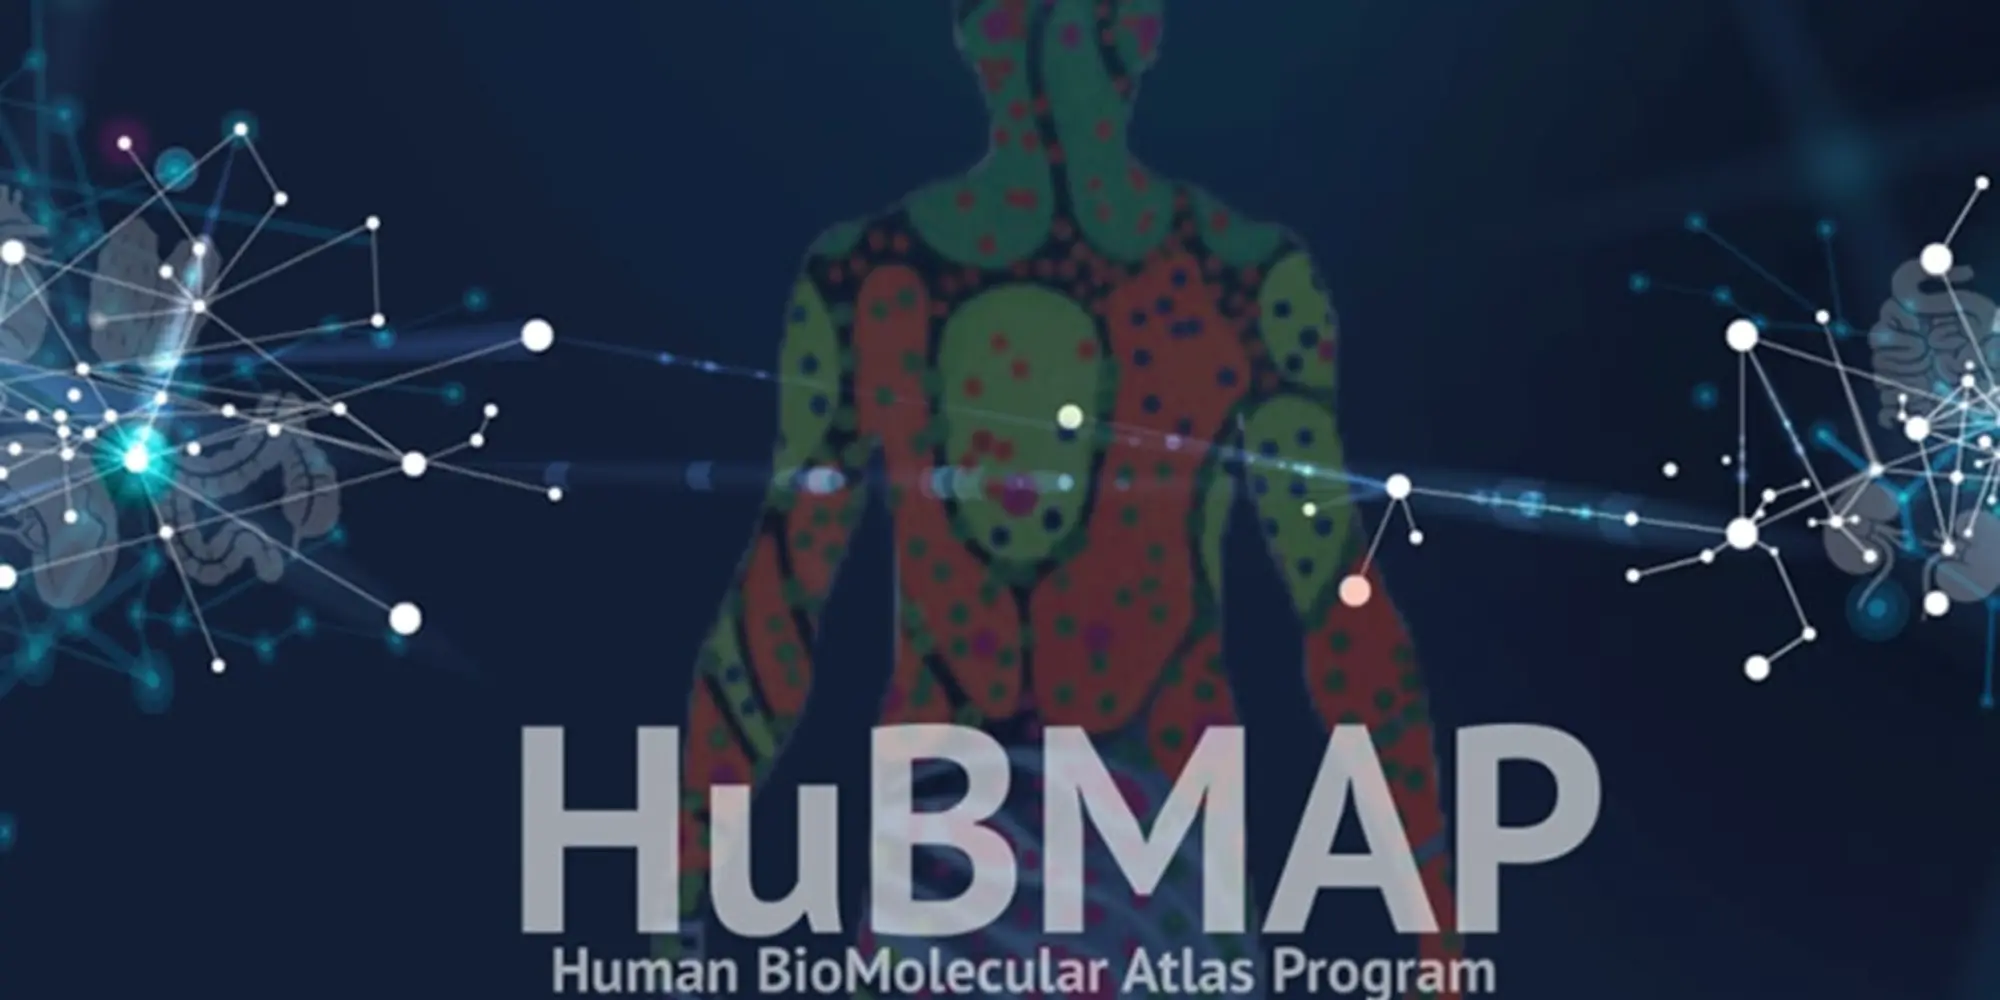 Human Body Atlas 900x600 Min .webp?itok=JPpWye3g